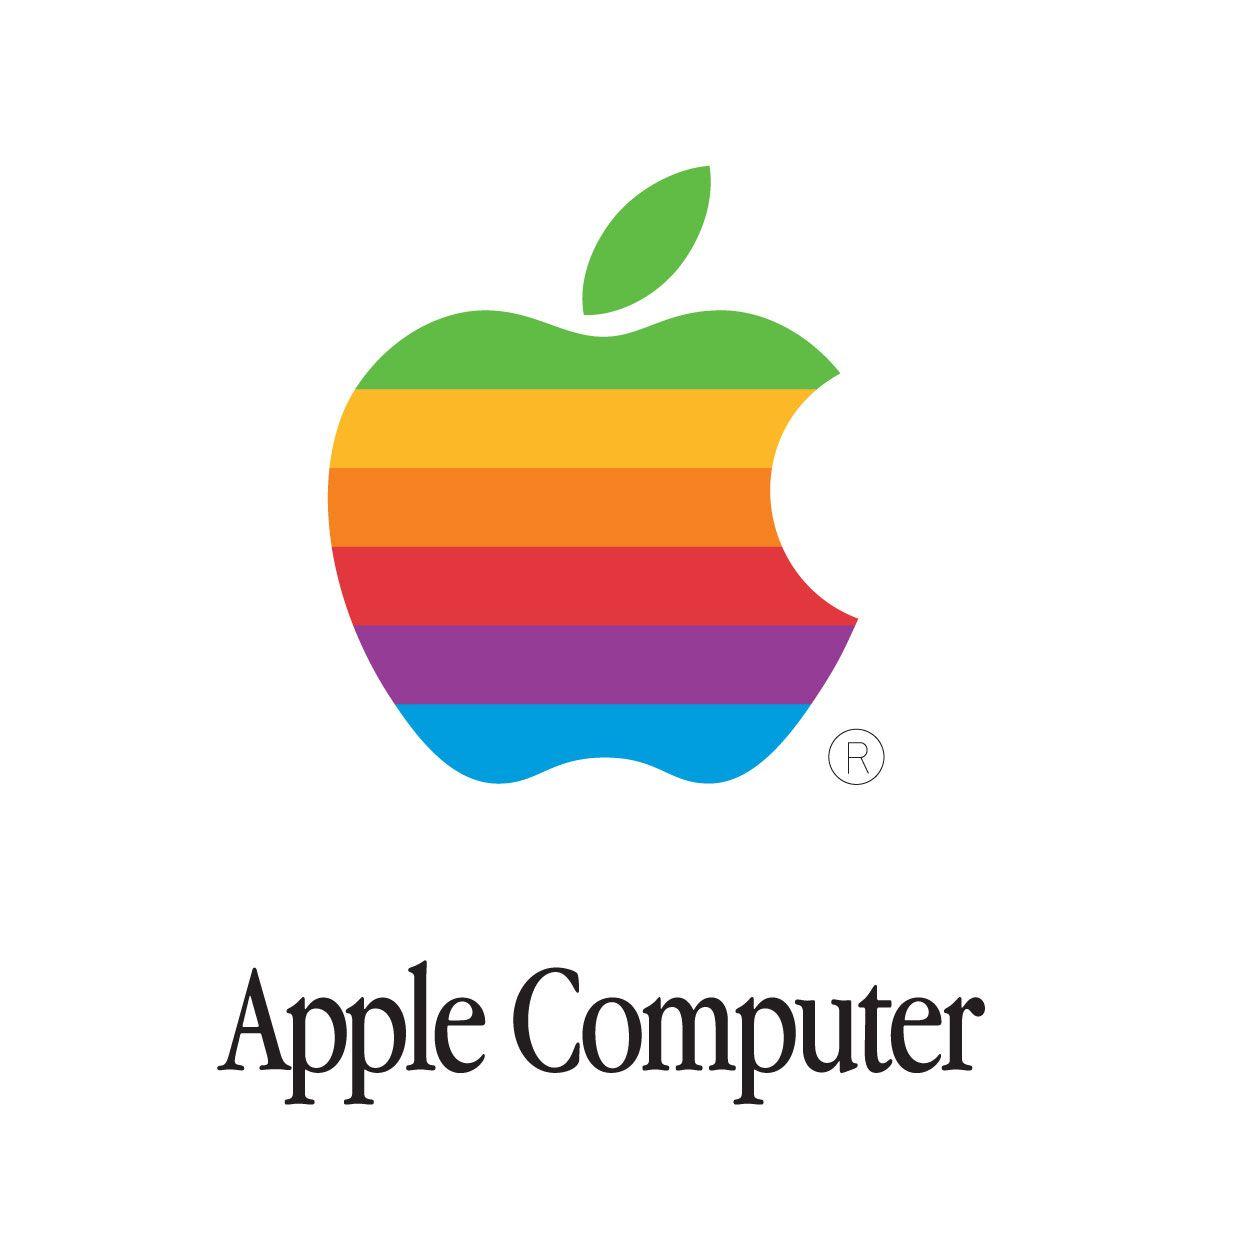 Cool Apple Computer Logo - Old-Apple-Computer-Logo - The Technology Geek